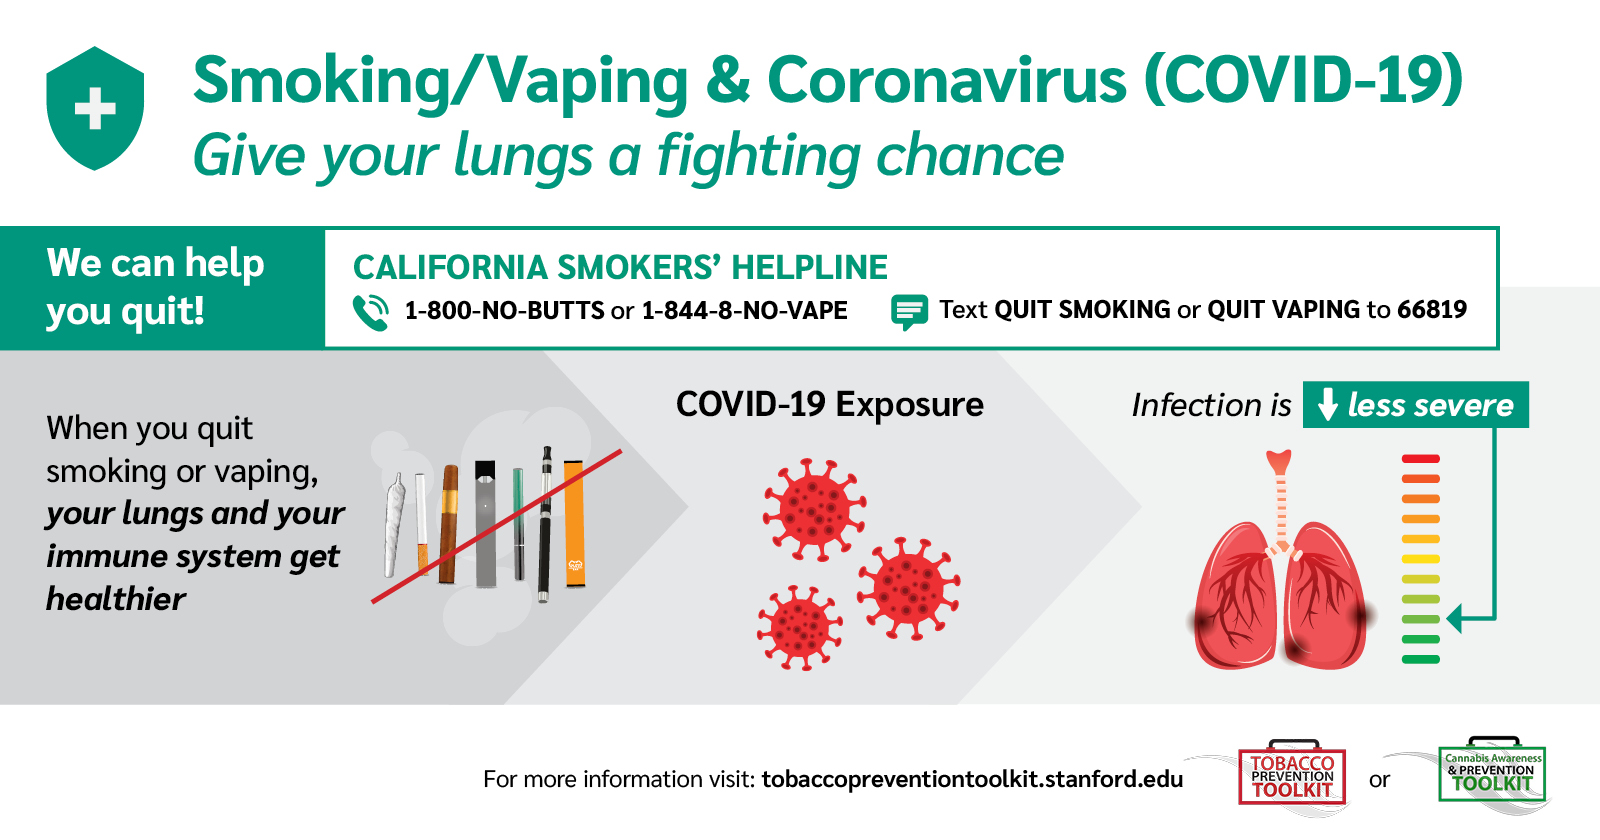 Smoking/Vaping and Coronavirus: California Smokers Helpline 1-800-NO-BUTTS or 1-844-NO-VAPE